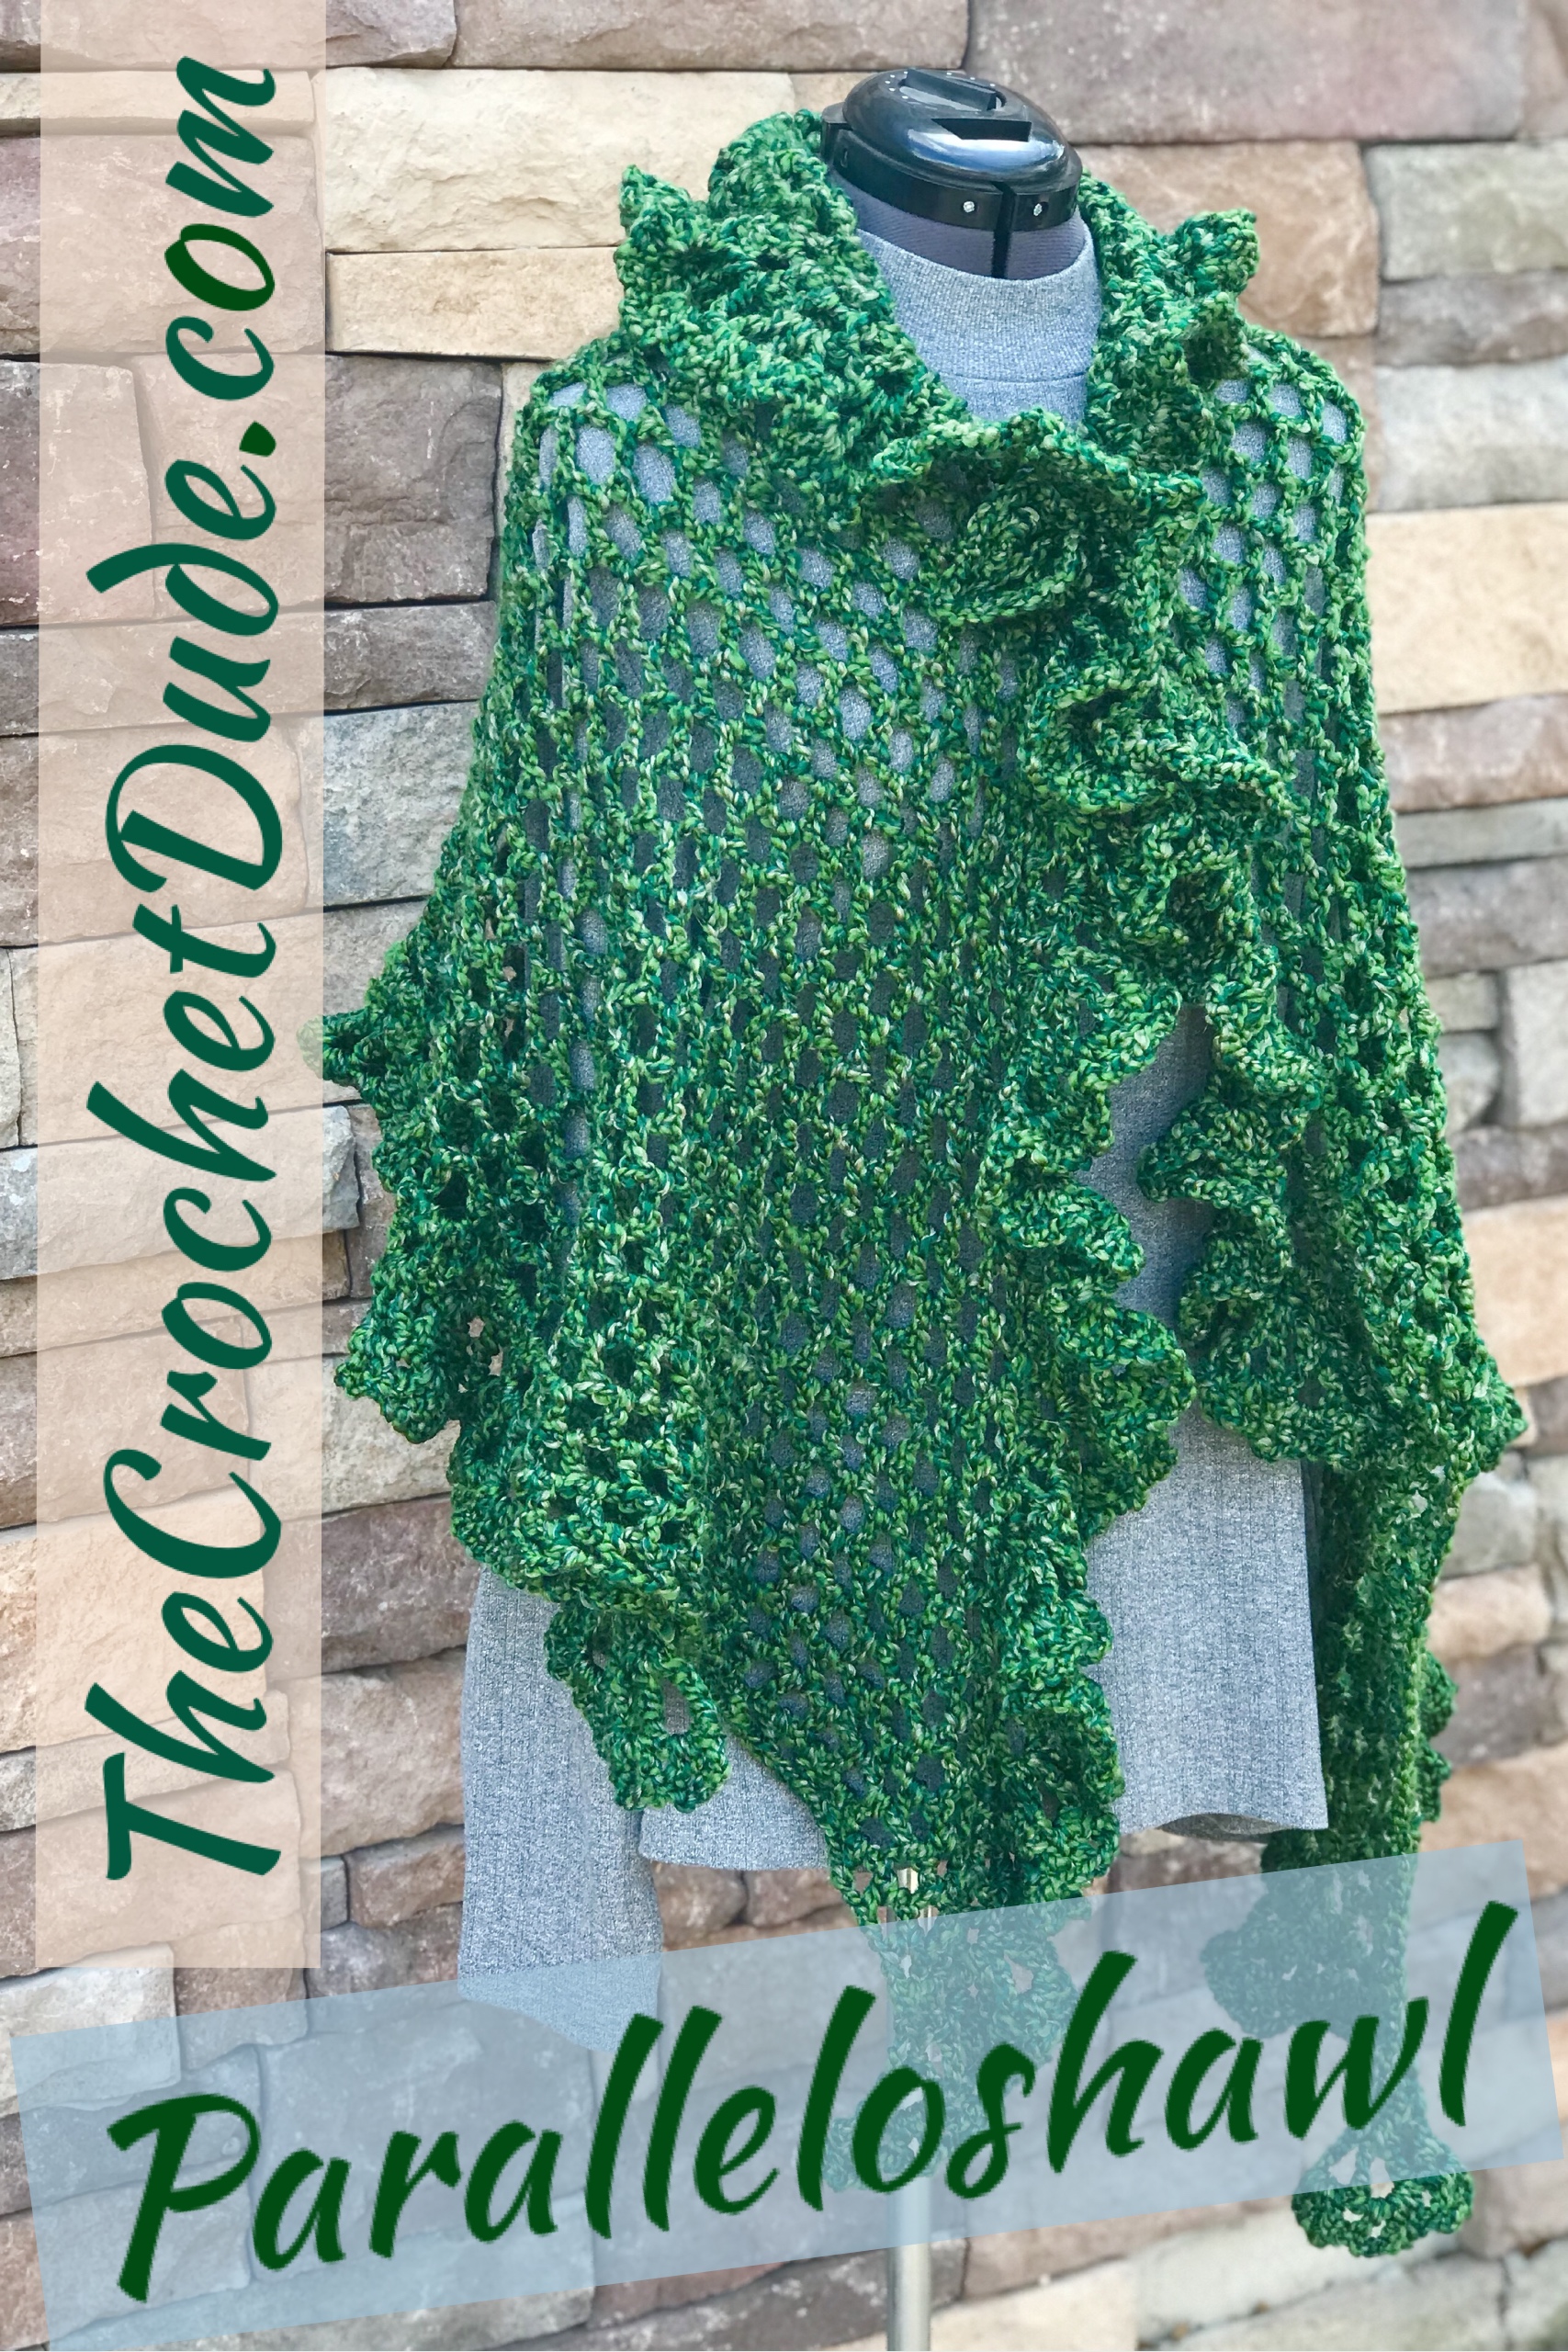 Free crochet pattern: Paralleloshawl by TheCrochetDude